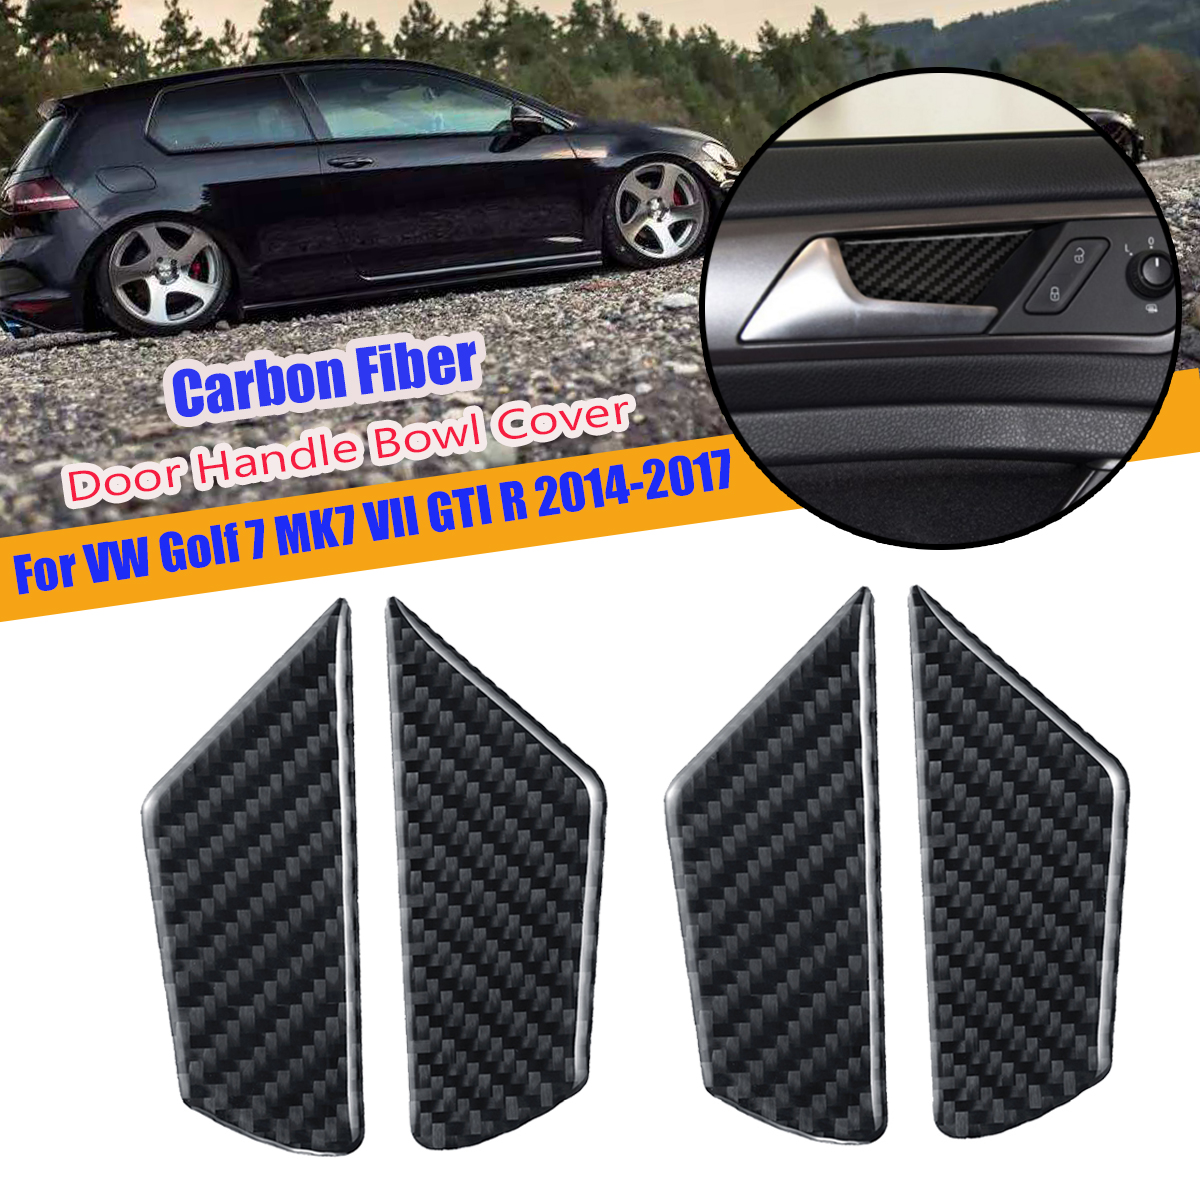 Door-Handle-Bowl-Carbon-Fiber-Cover-Trim-For-VW-Golf-7-MK7-VII-GTI-R-2014-2017-1729866-1